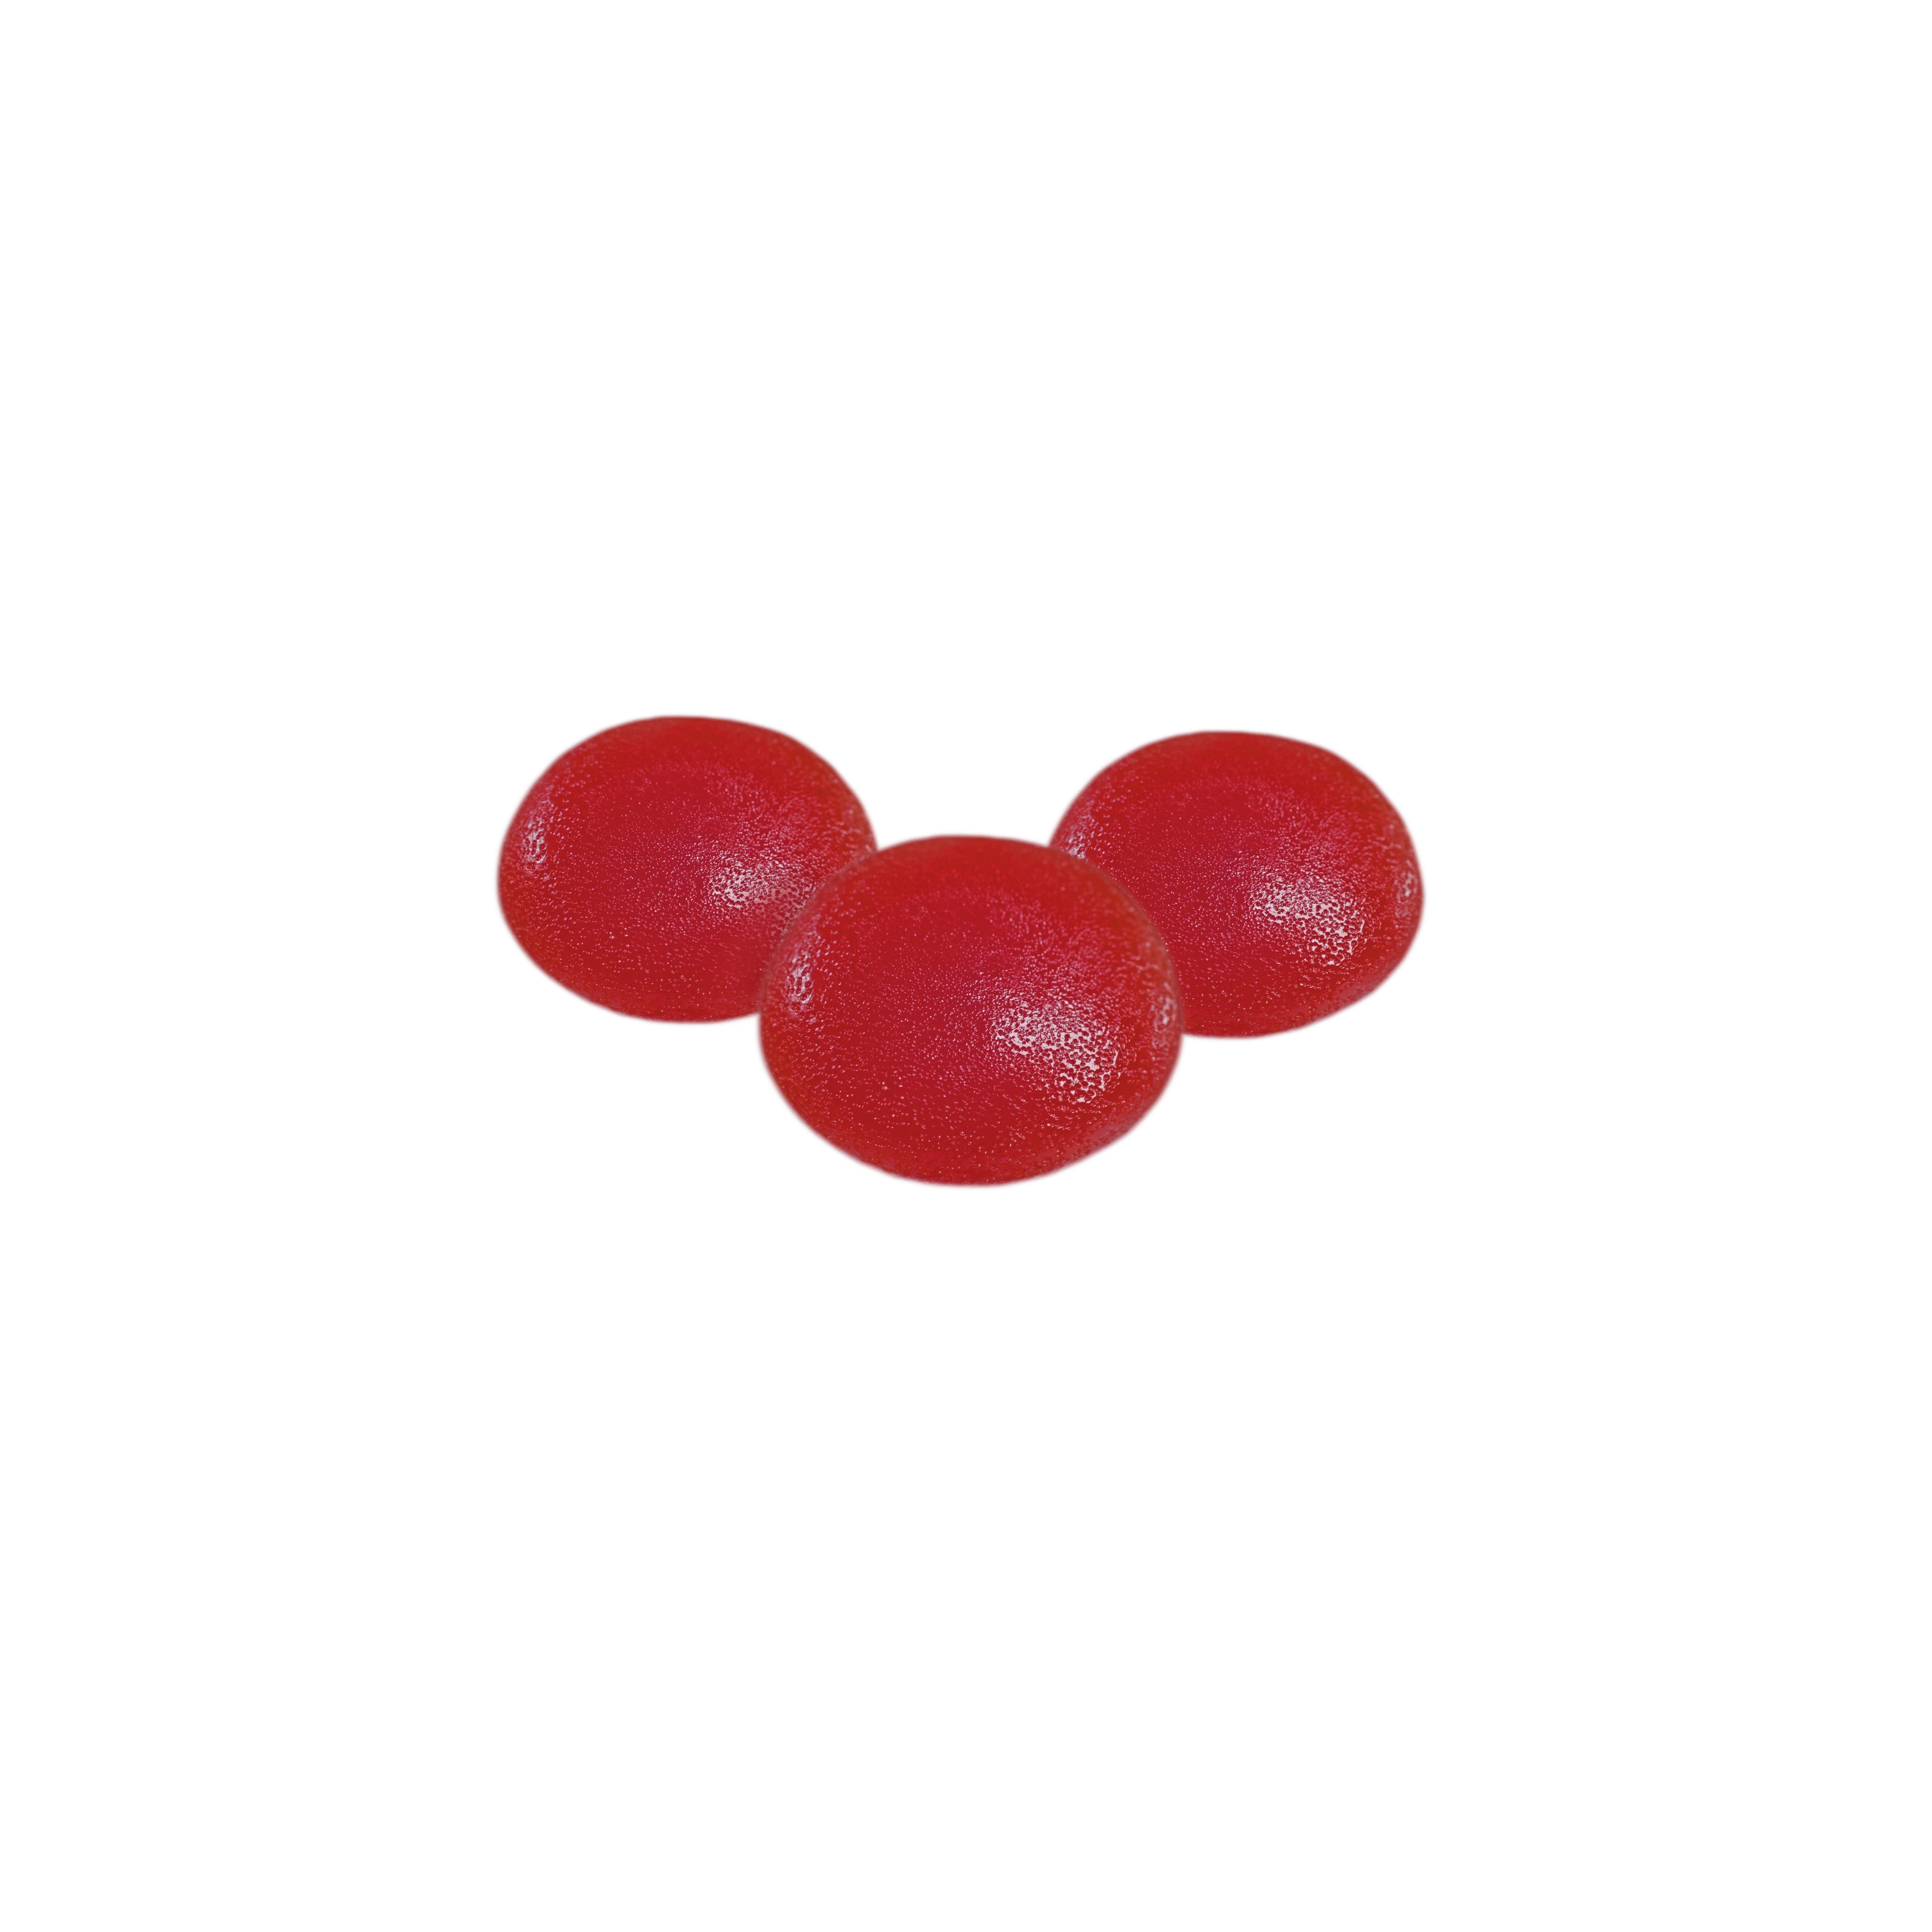 Fruit Drops (gummies) - Raspberry CBD 5 Pack